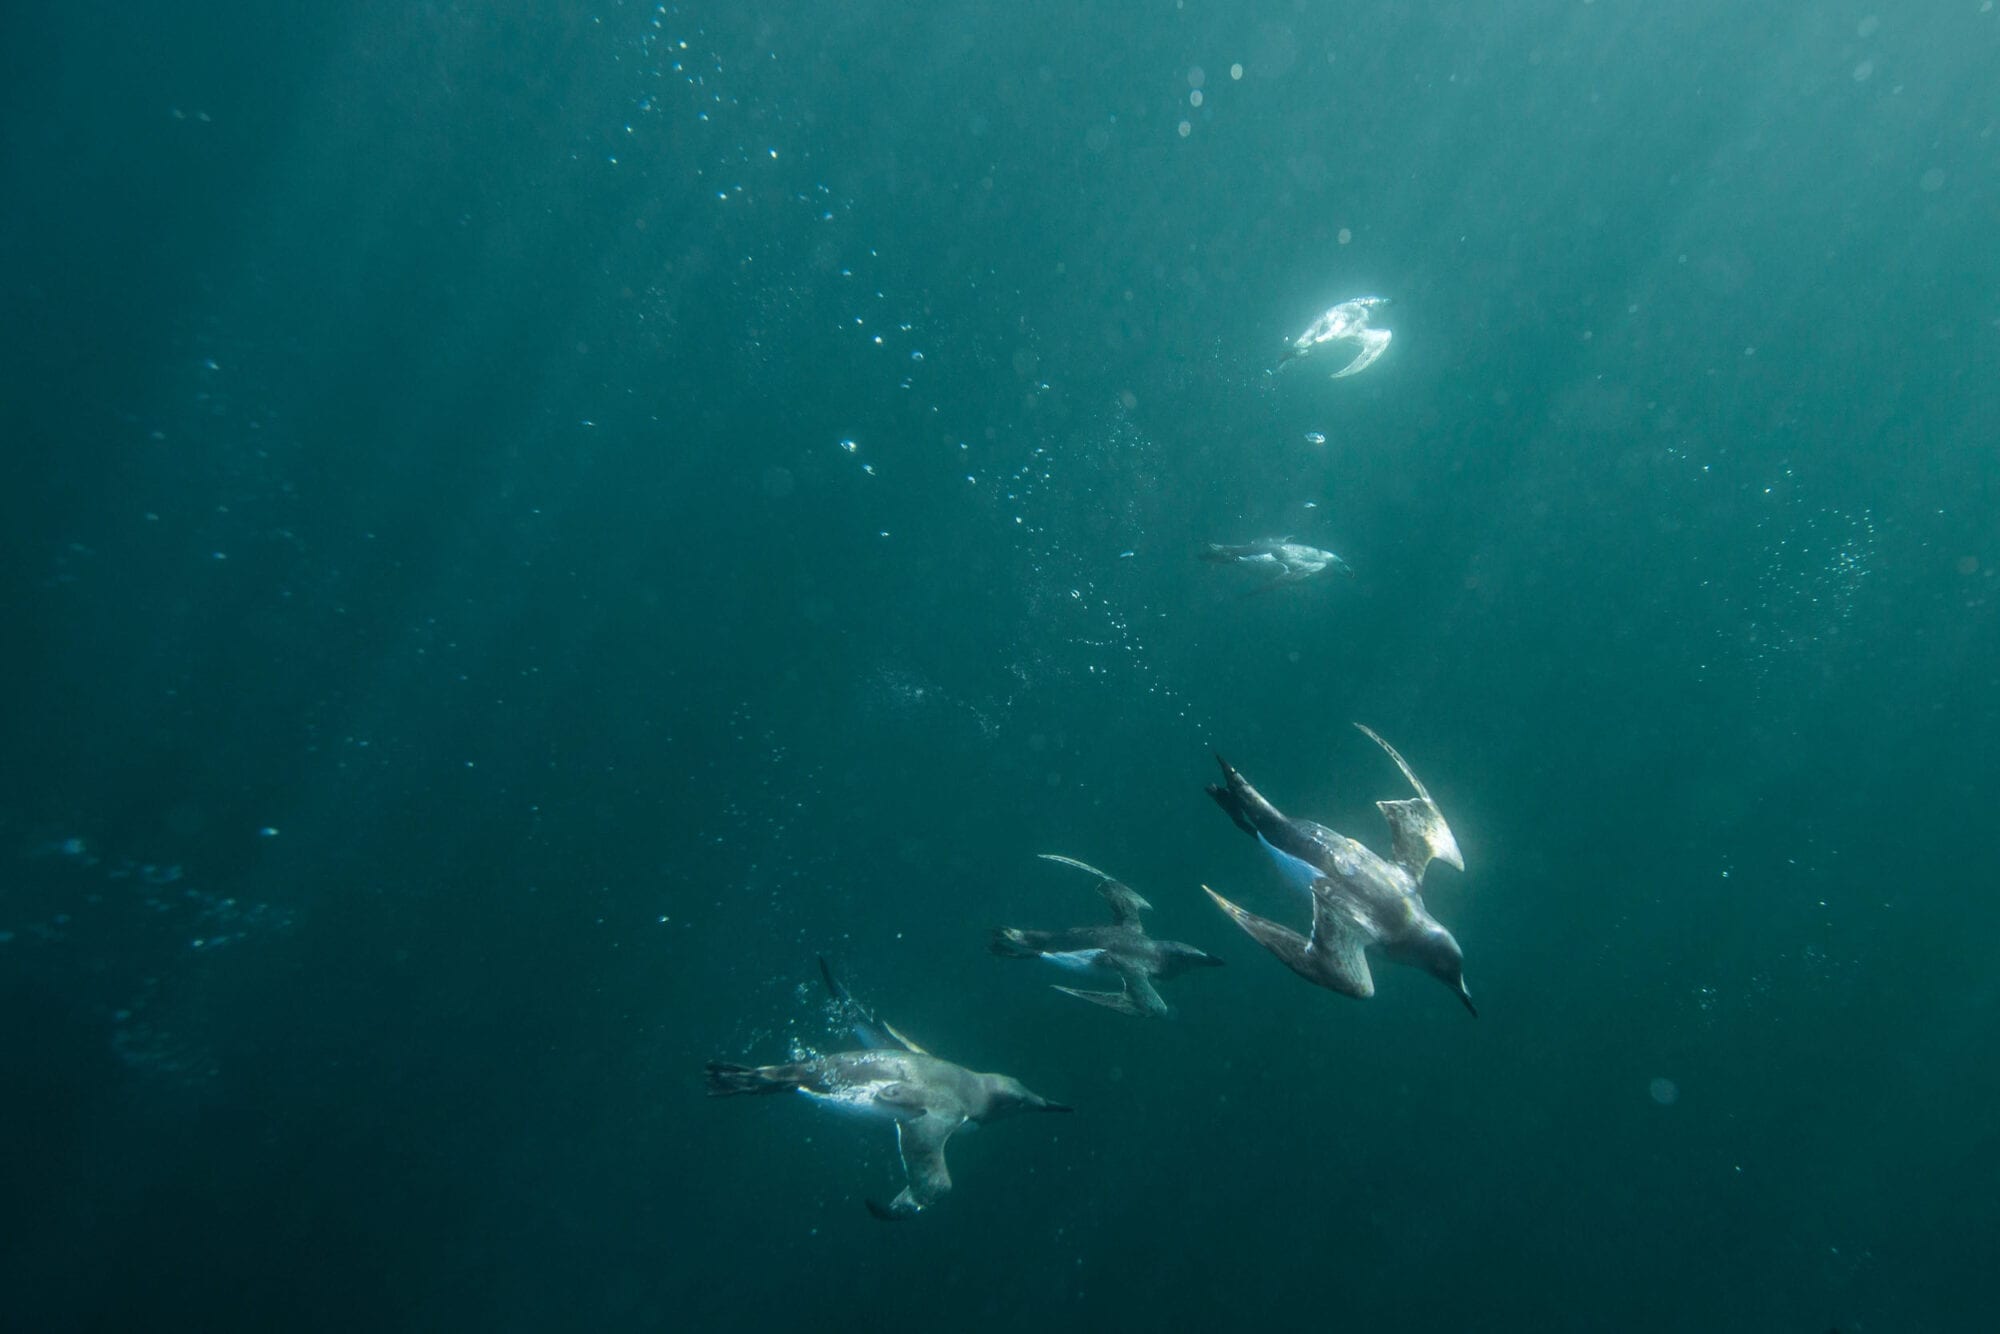 Guillemots swim through a dark-green underwater world, lit by shafts of sunlight from the surface